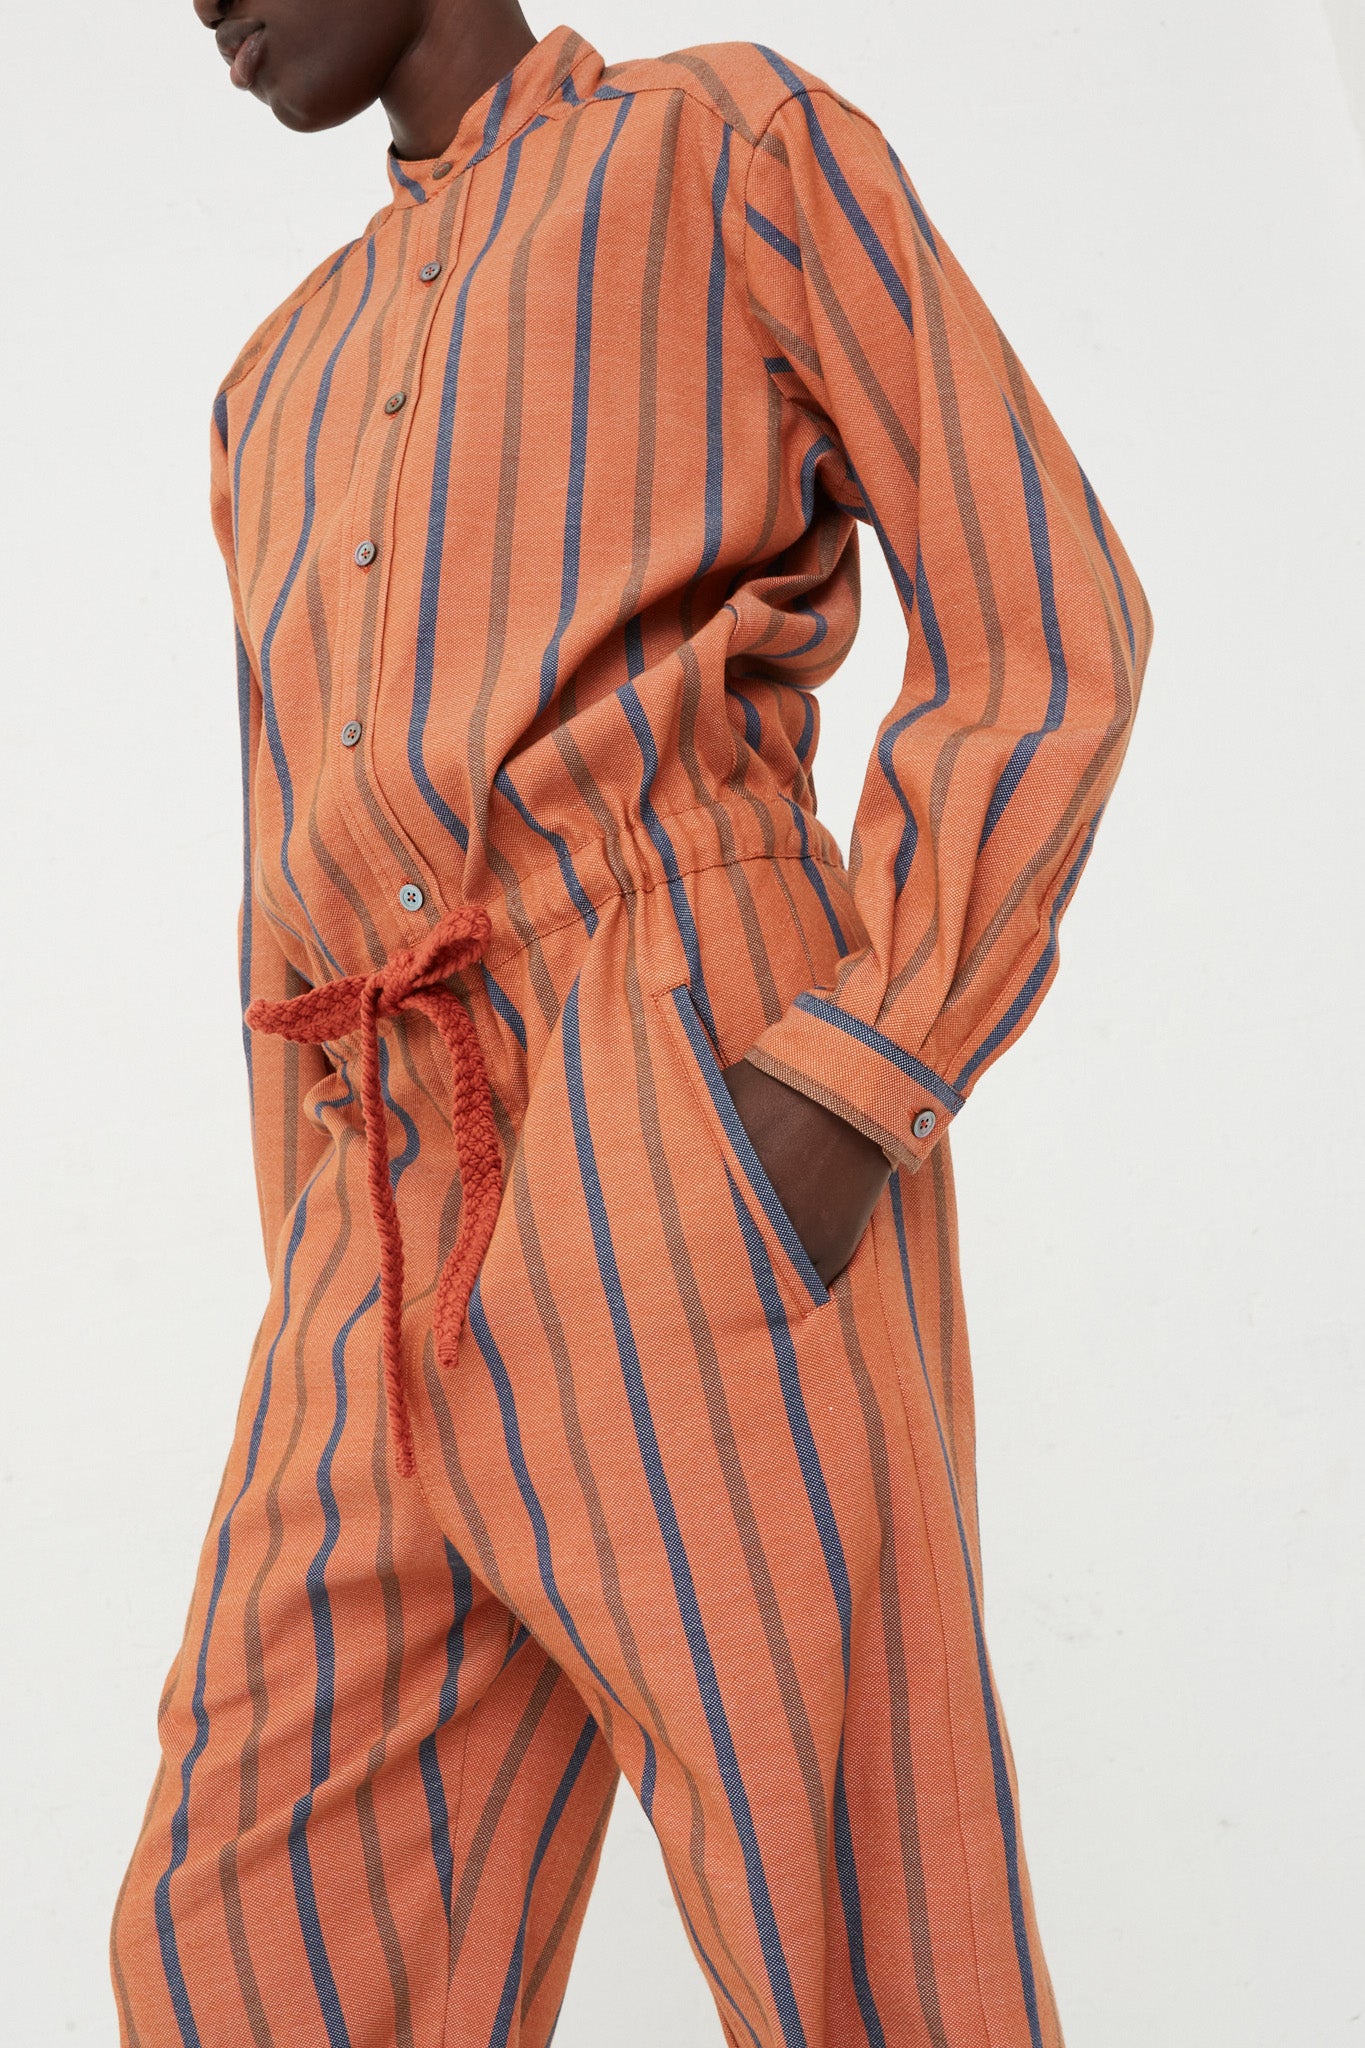 Marrakshi Life - Jumpsuit in Stripe 40 side detail with hand in pocket